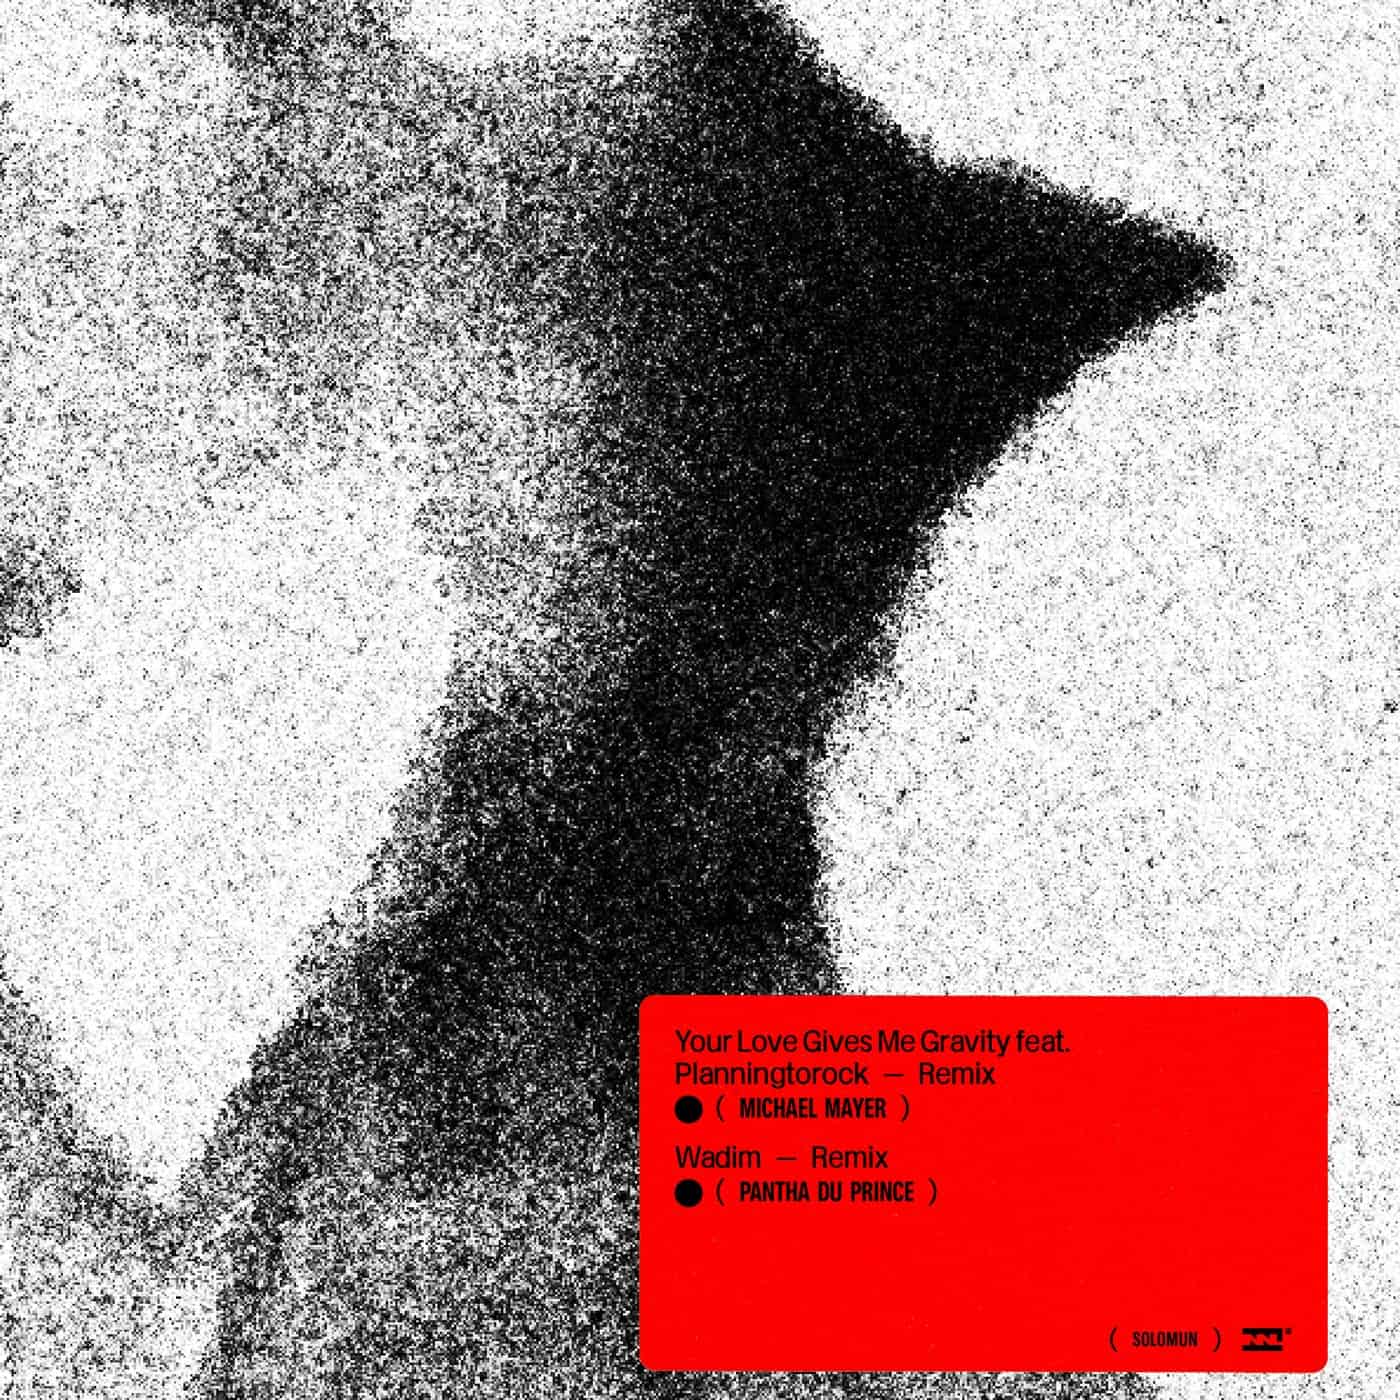 Download Planningtorock, Solomun, Jam Rostron - Nobody Is Not Loved, Remixes, Pt. 6 on Electrobuzz